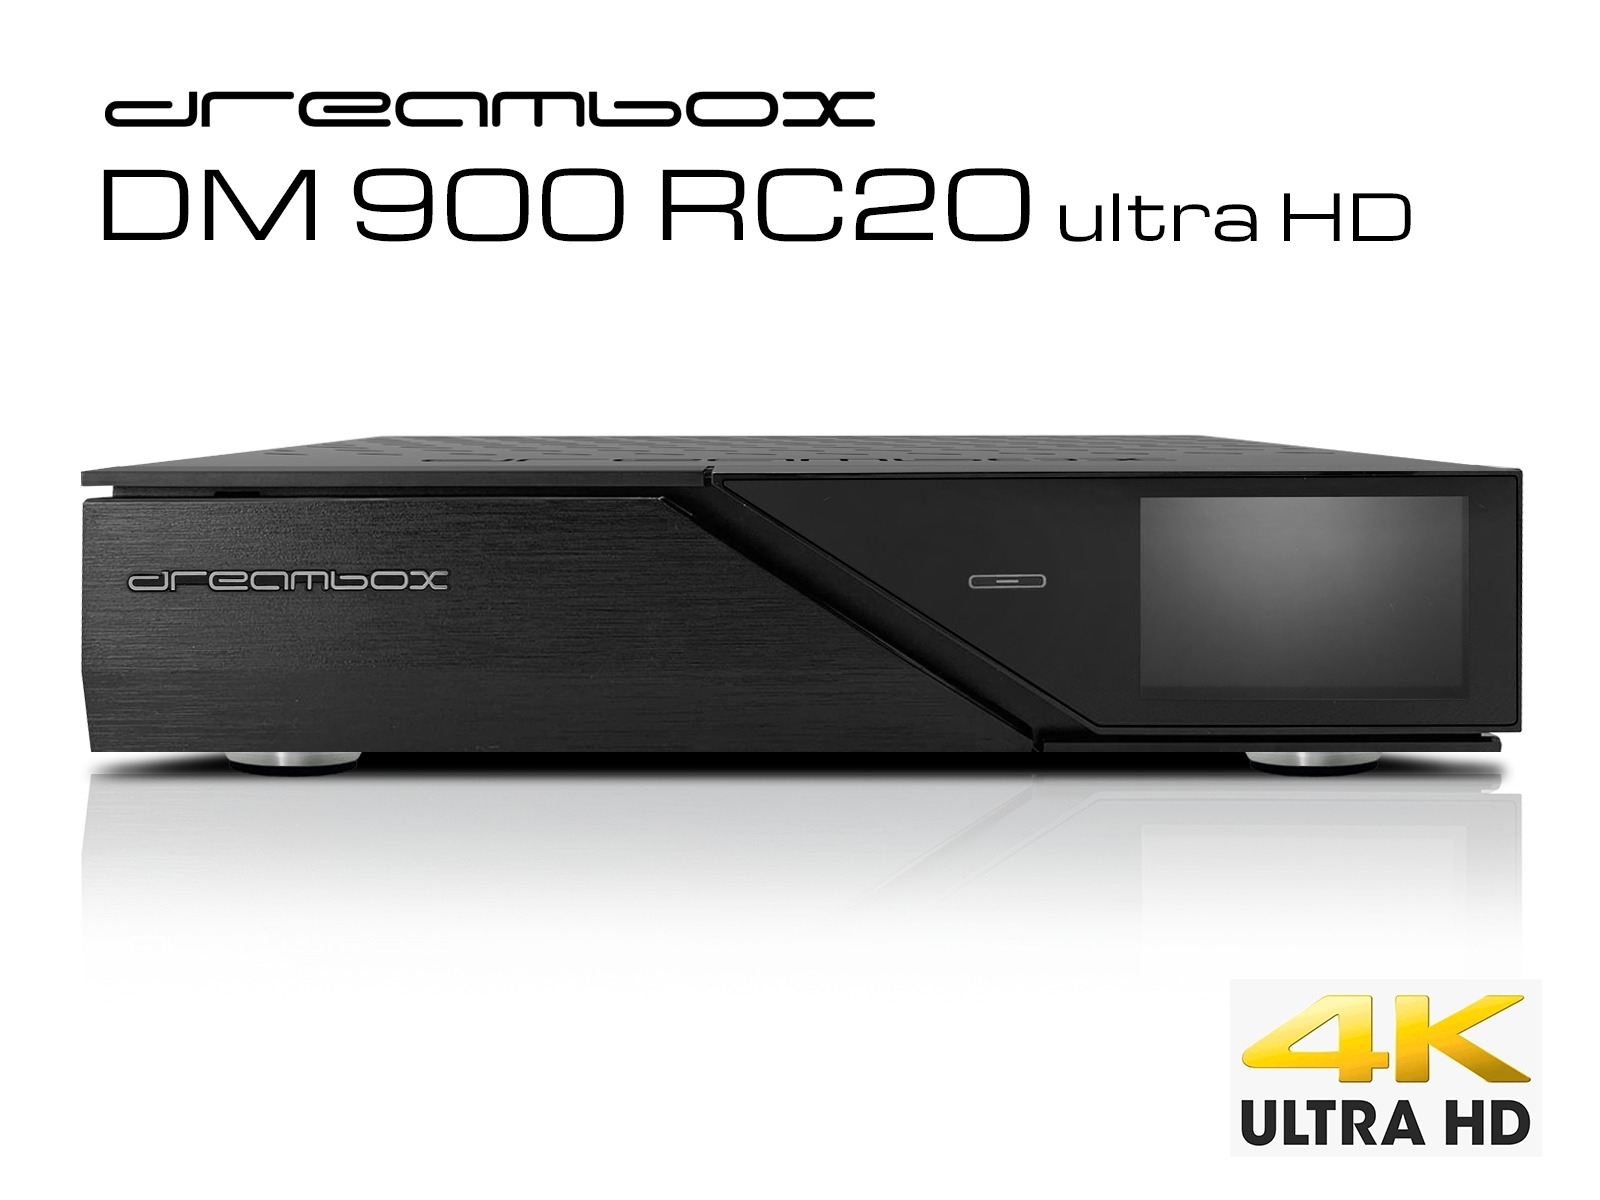 Dreambox DM900 UHD 4K 1x DVB-S2X FBC MultiStream Tuner E2 Linux PVR Receiver